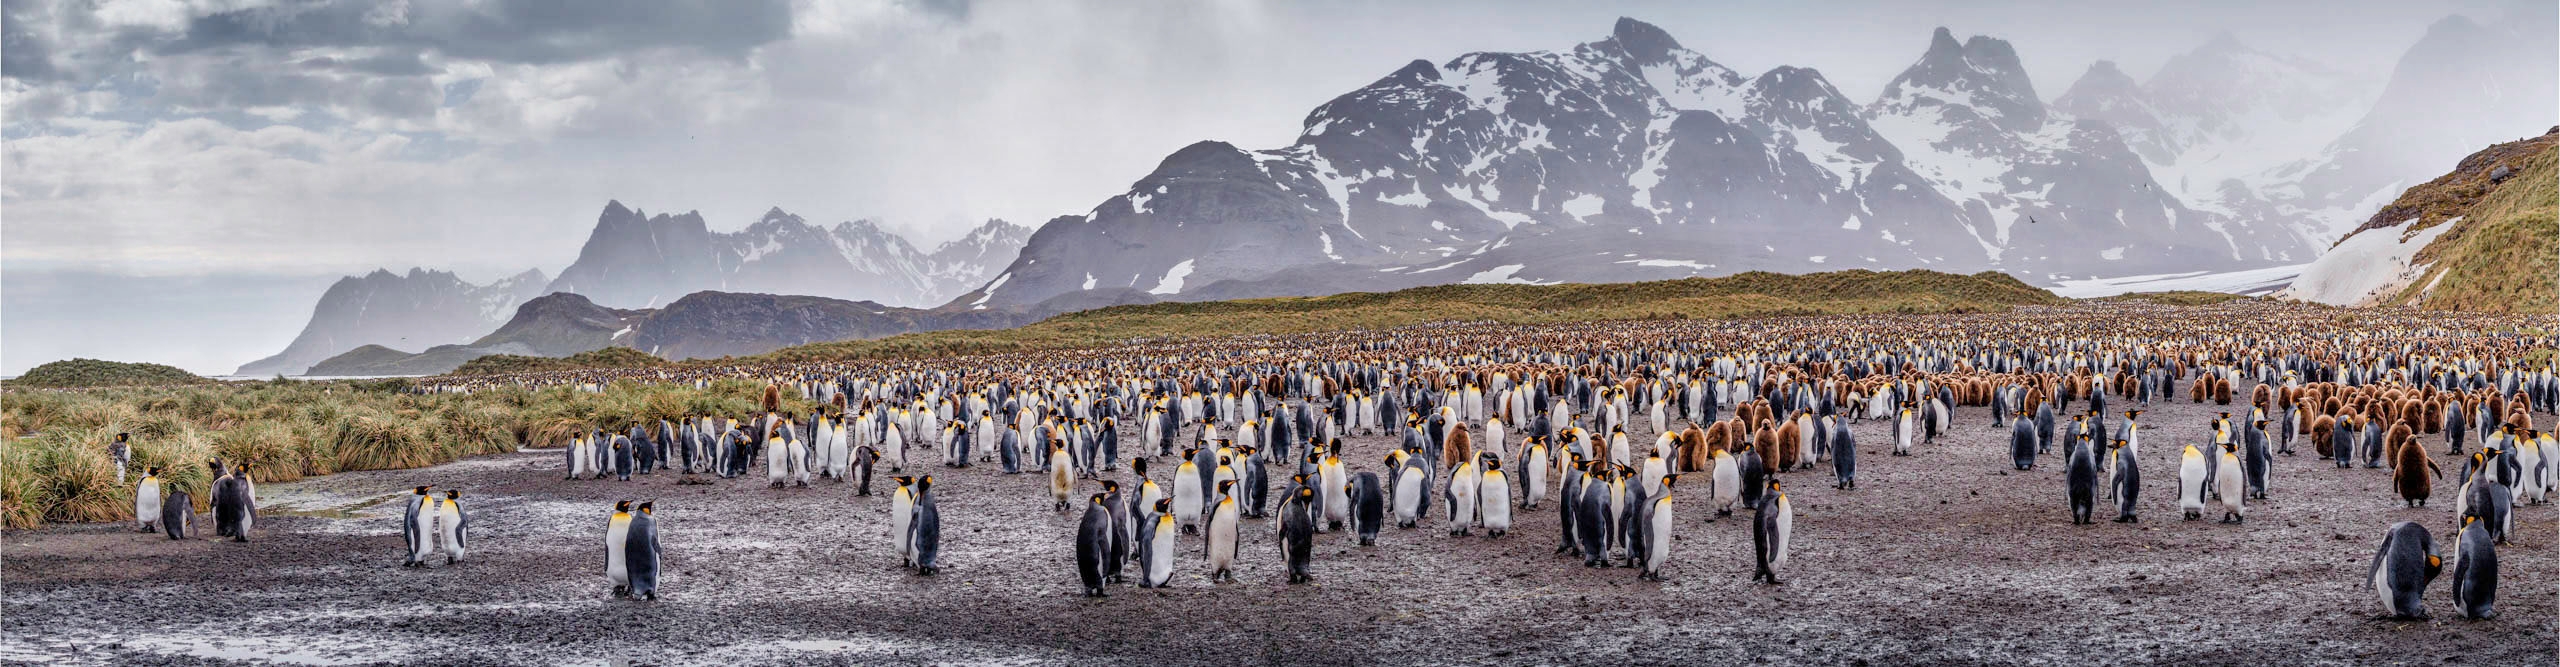 Large colony of King penguins at Salisbury plain, South Georgia Island, Southern Atlantic Ocean.